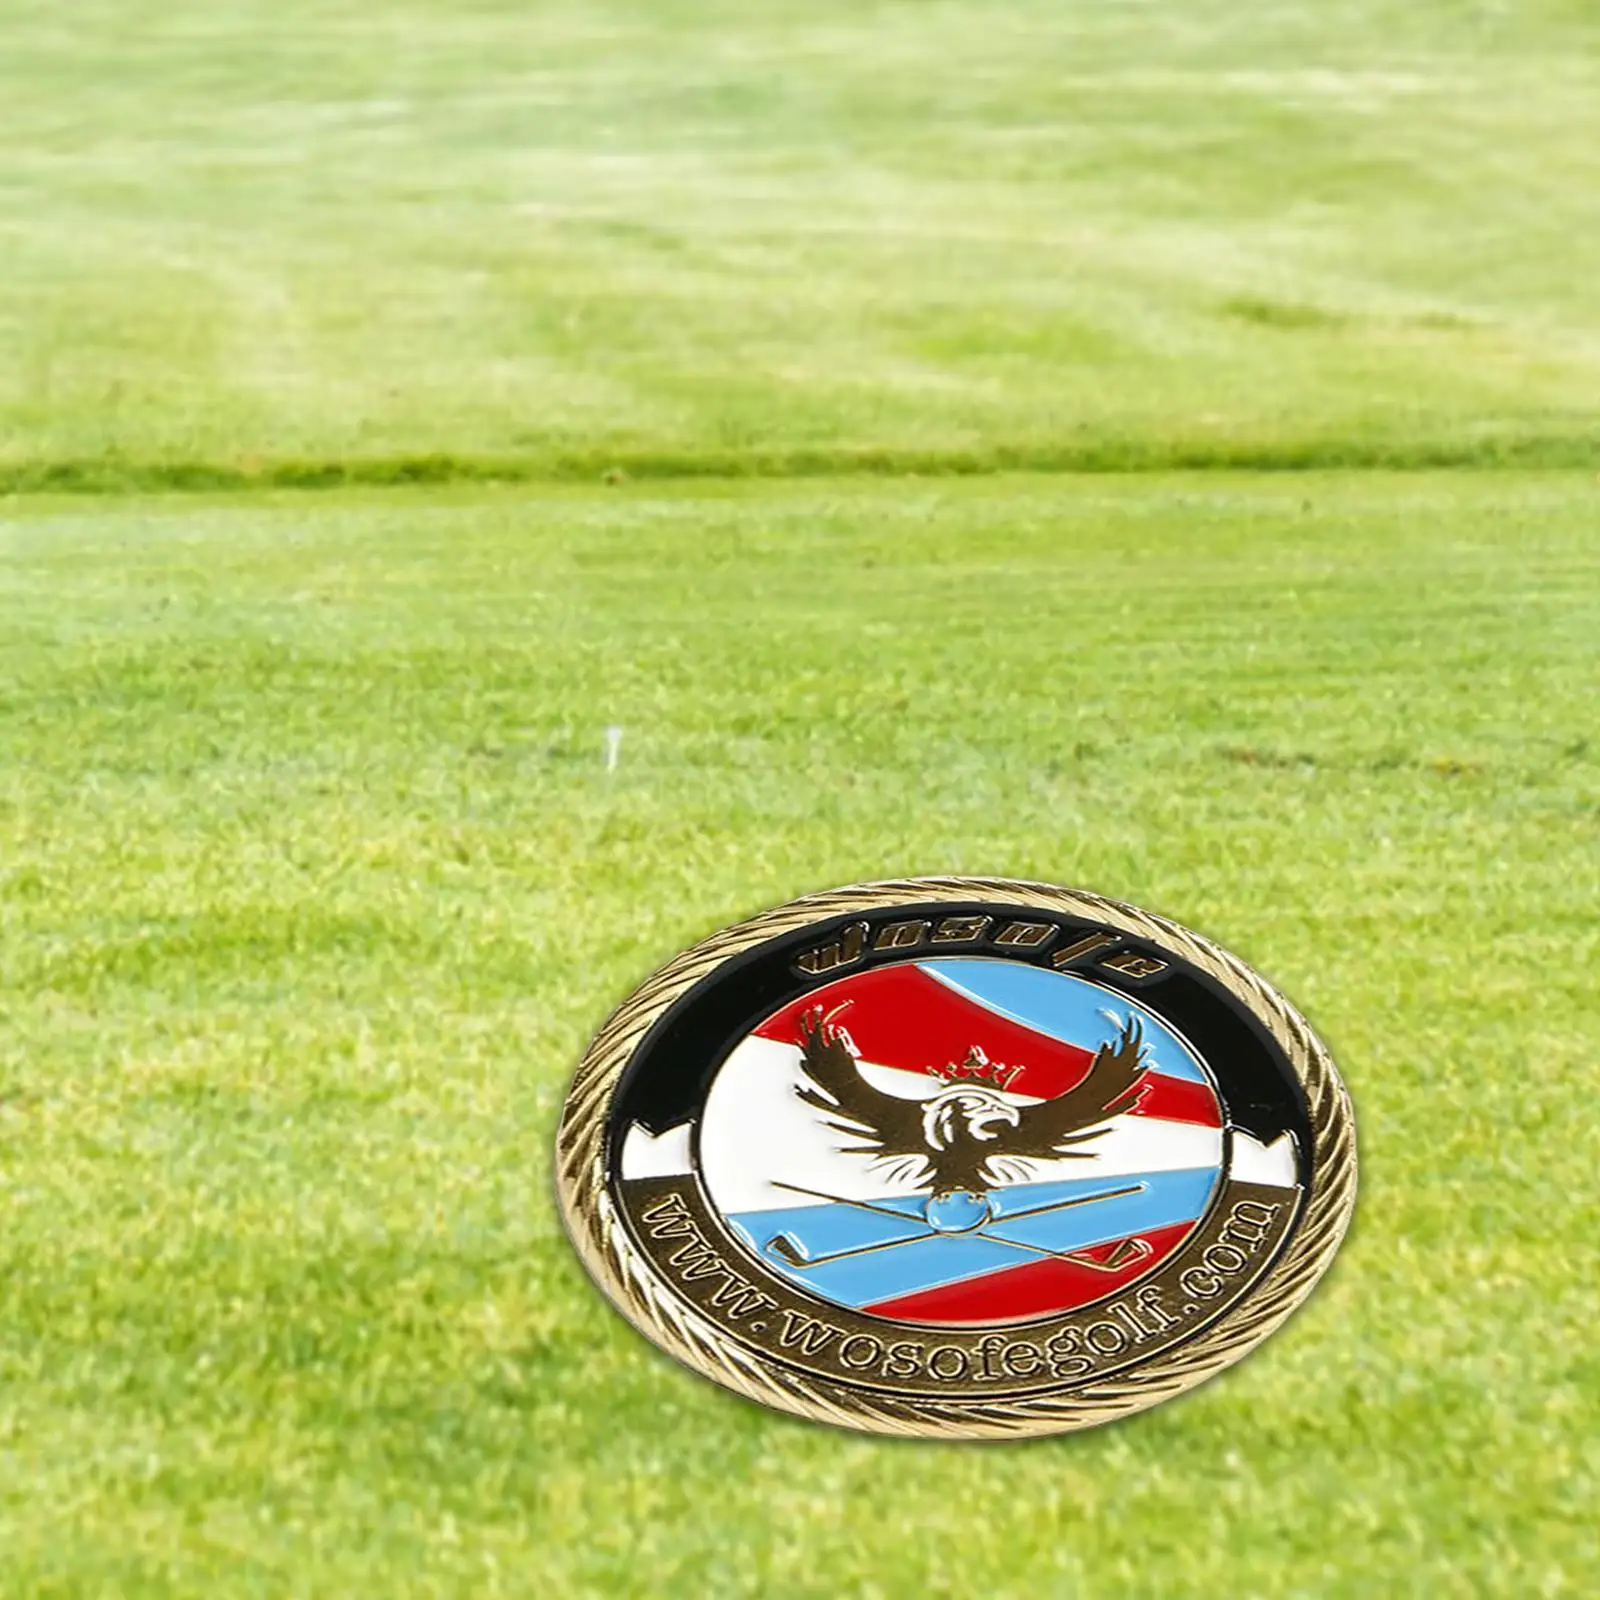 Funny Position Mark Club Putting Detachable Clip Golf Ball Marker Keepsake